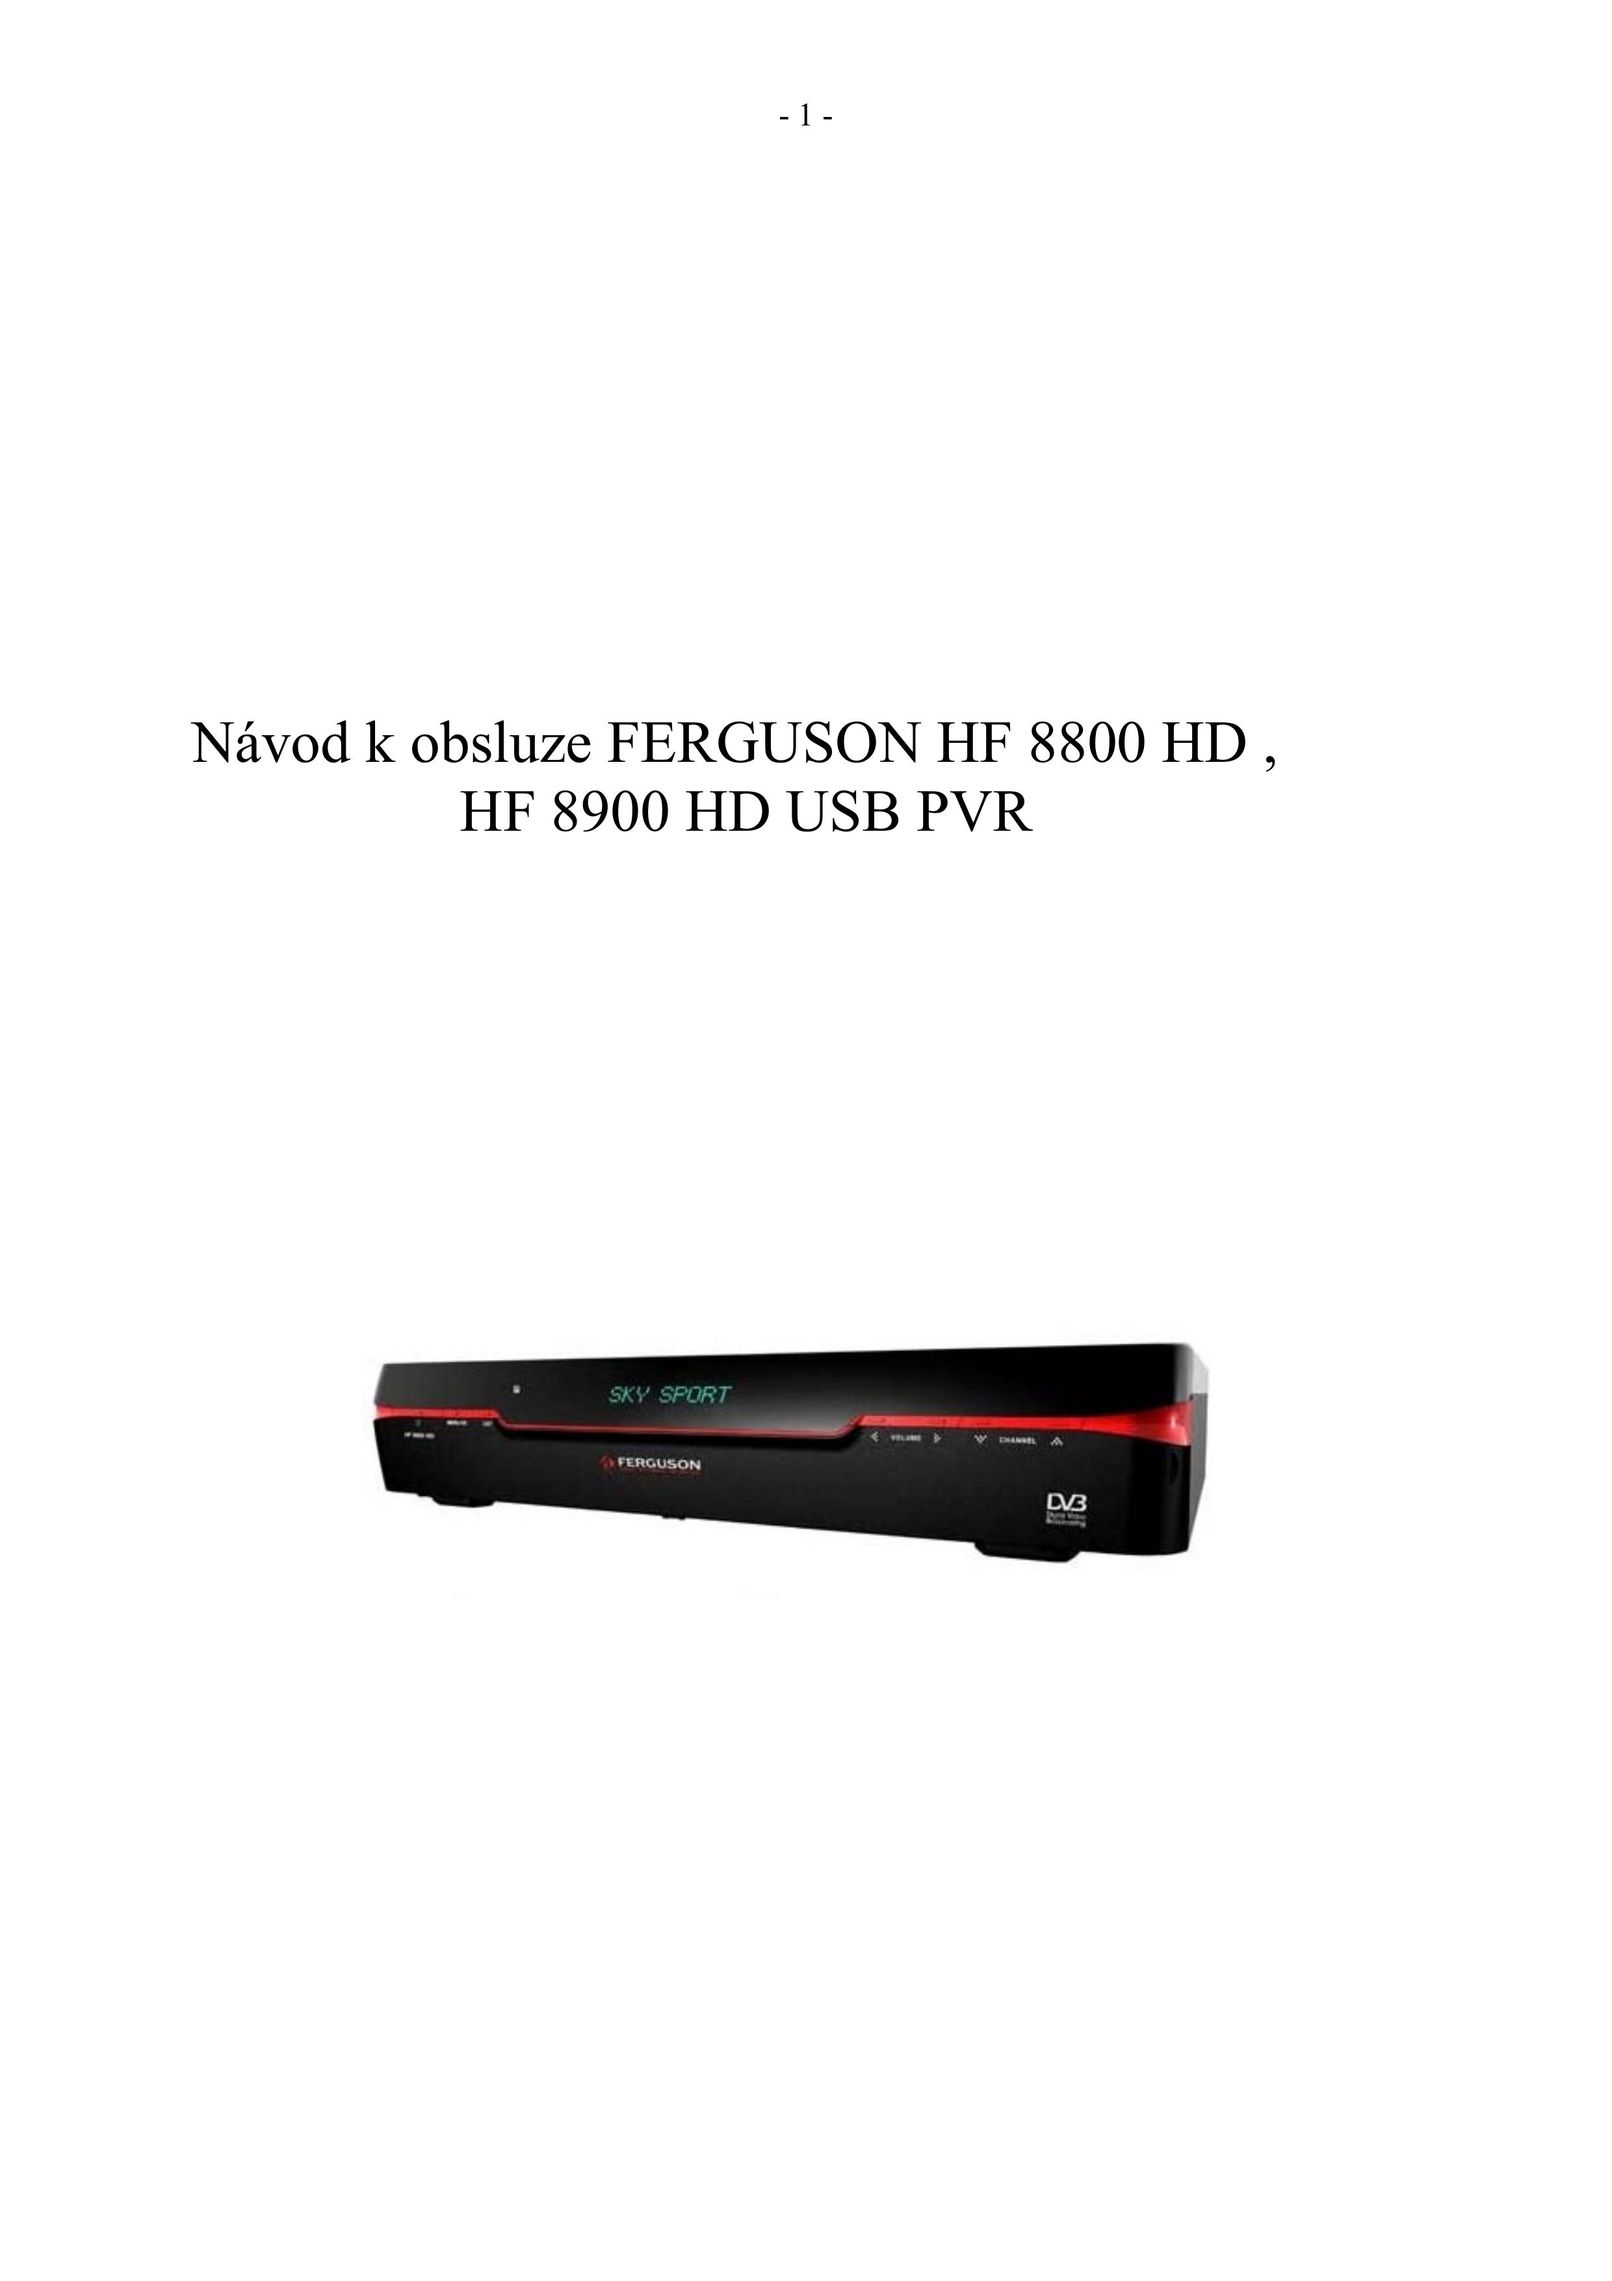 Ferguson HF 8800 HD Computer Drive User Manual